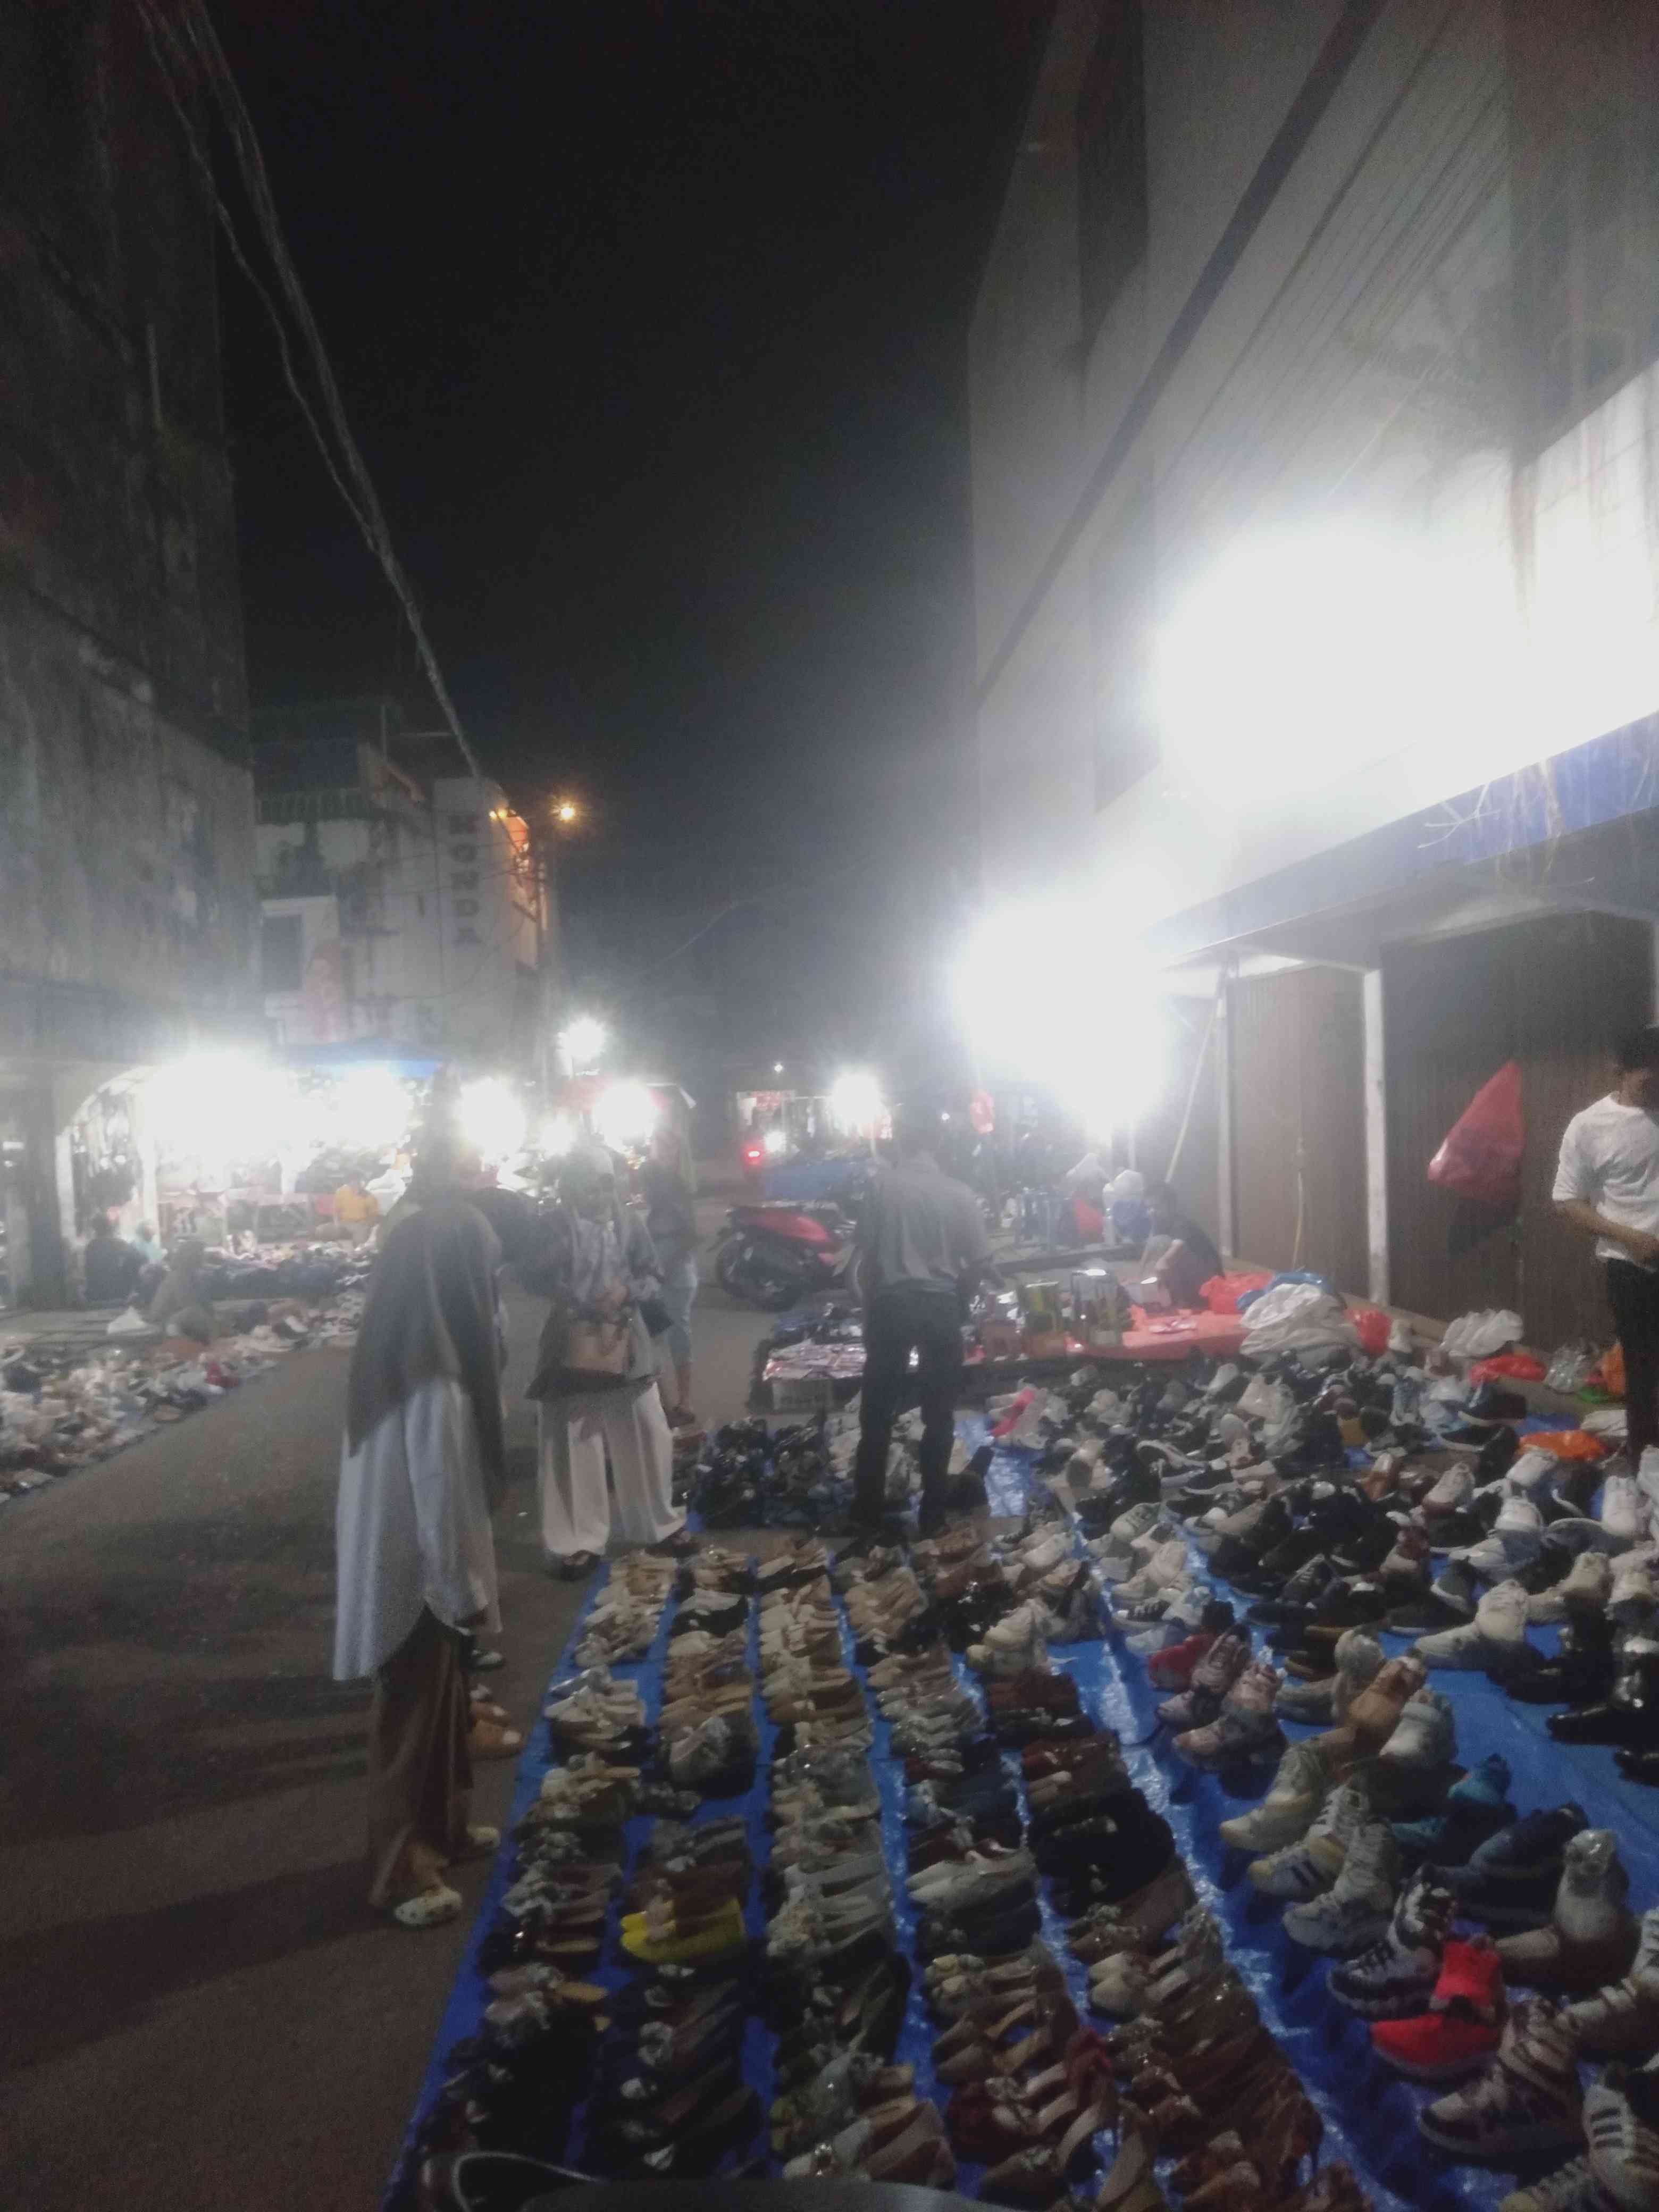 Satu Minggu Ramadhan, Pasar Jongkok Tembilahan Masih Sepi Pembeli